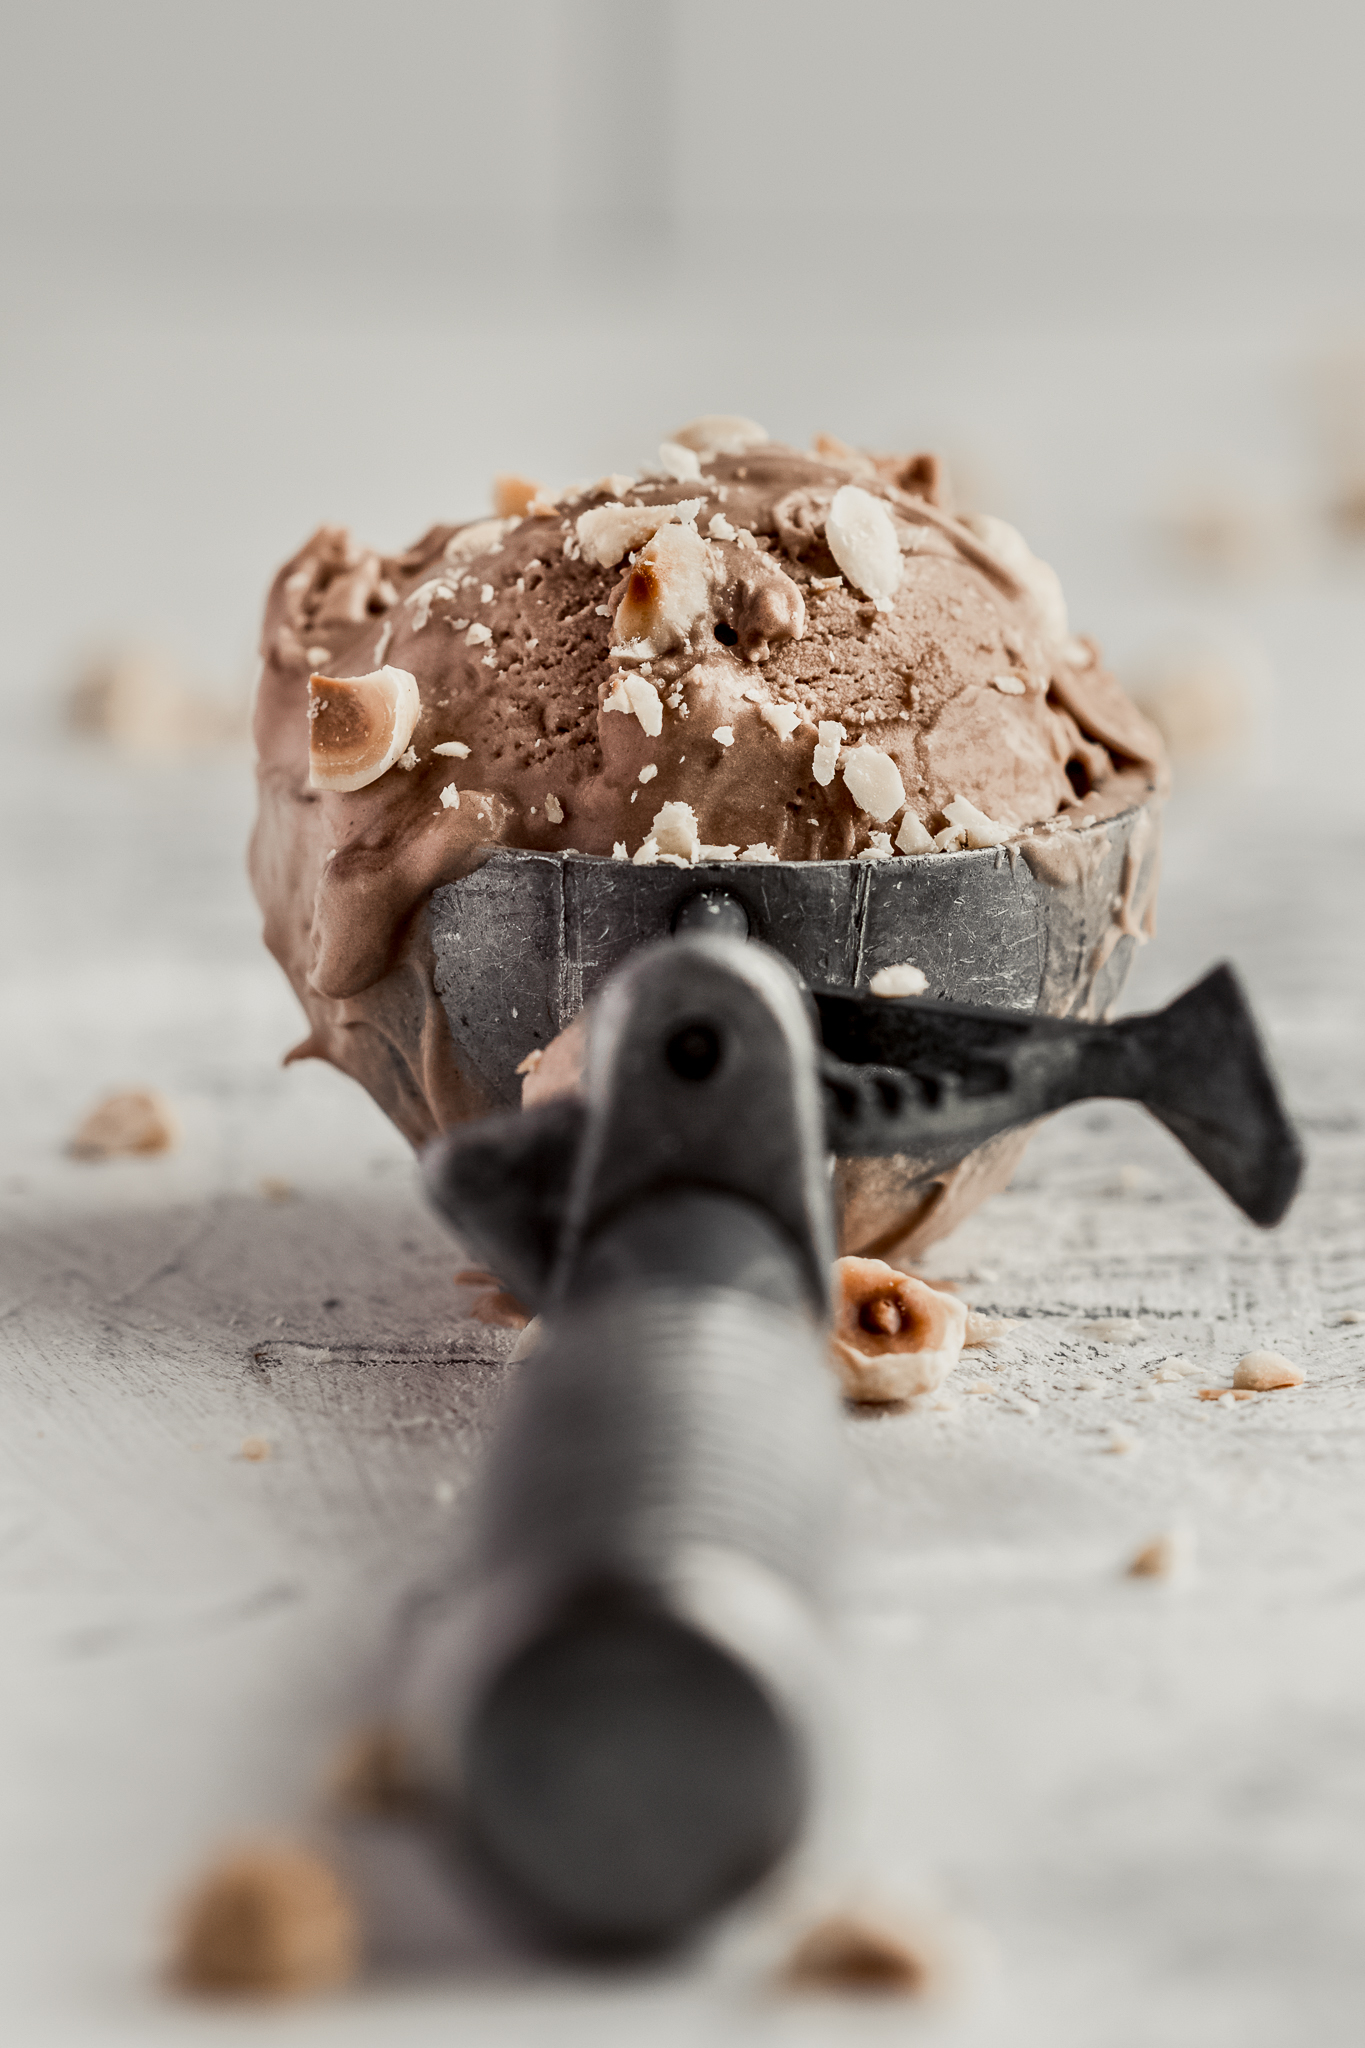 single scoop of nutella ice cream in a vintage scoop